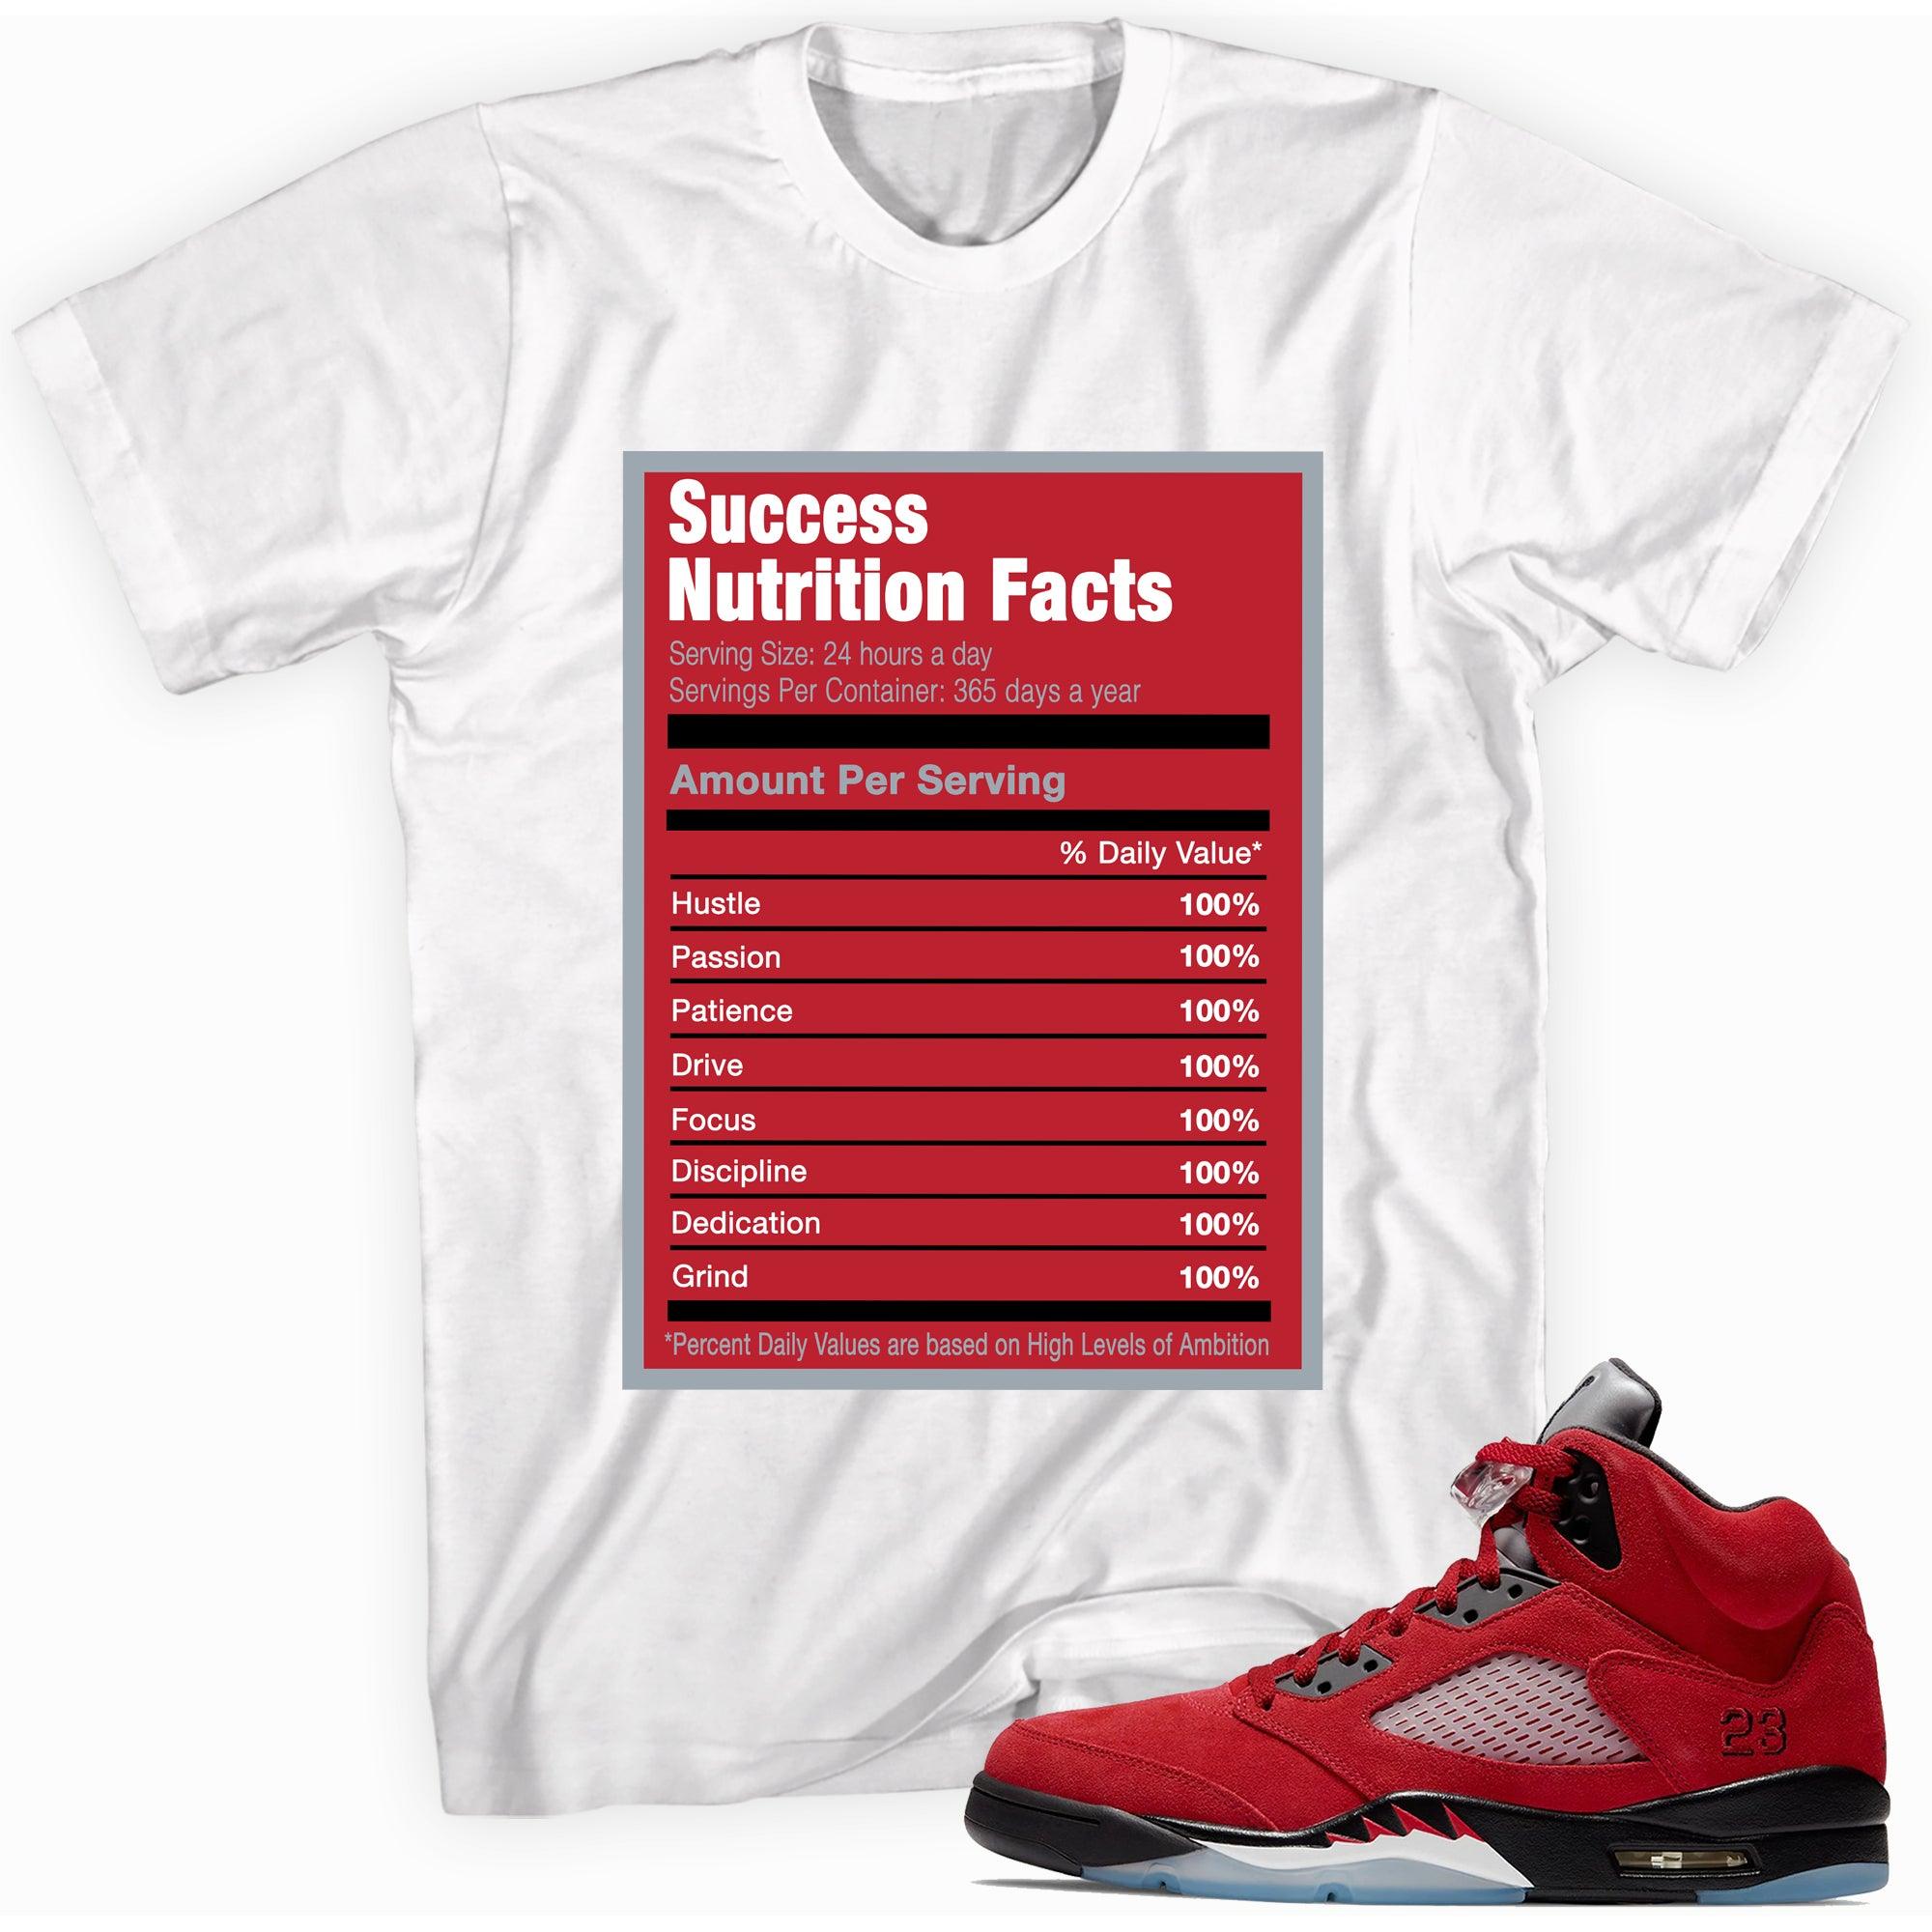 Success Nutrition Facts Shirt AJ 5 Retro Raging Bull 2021 photo